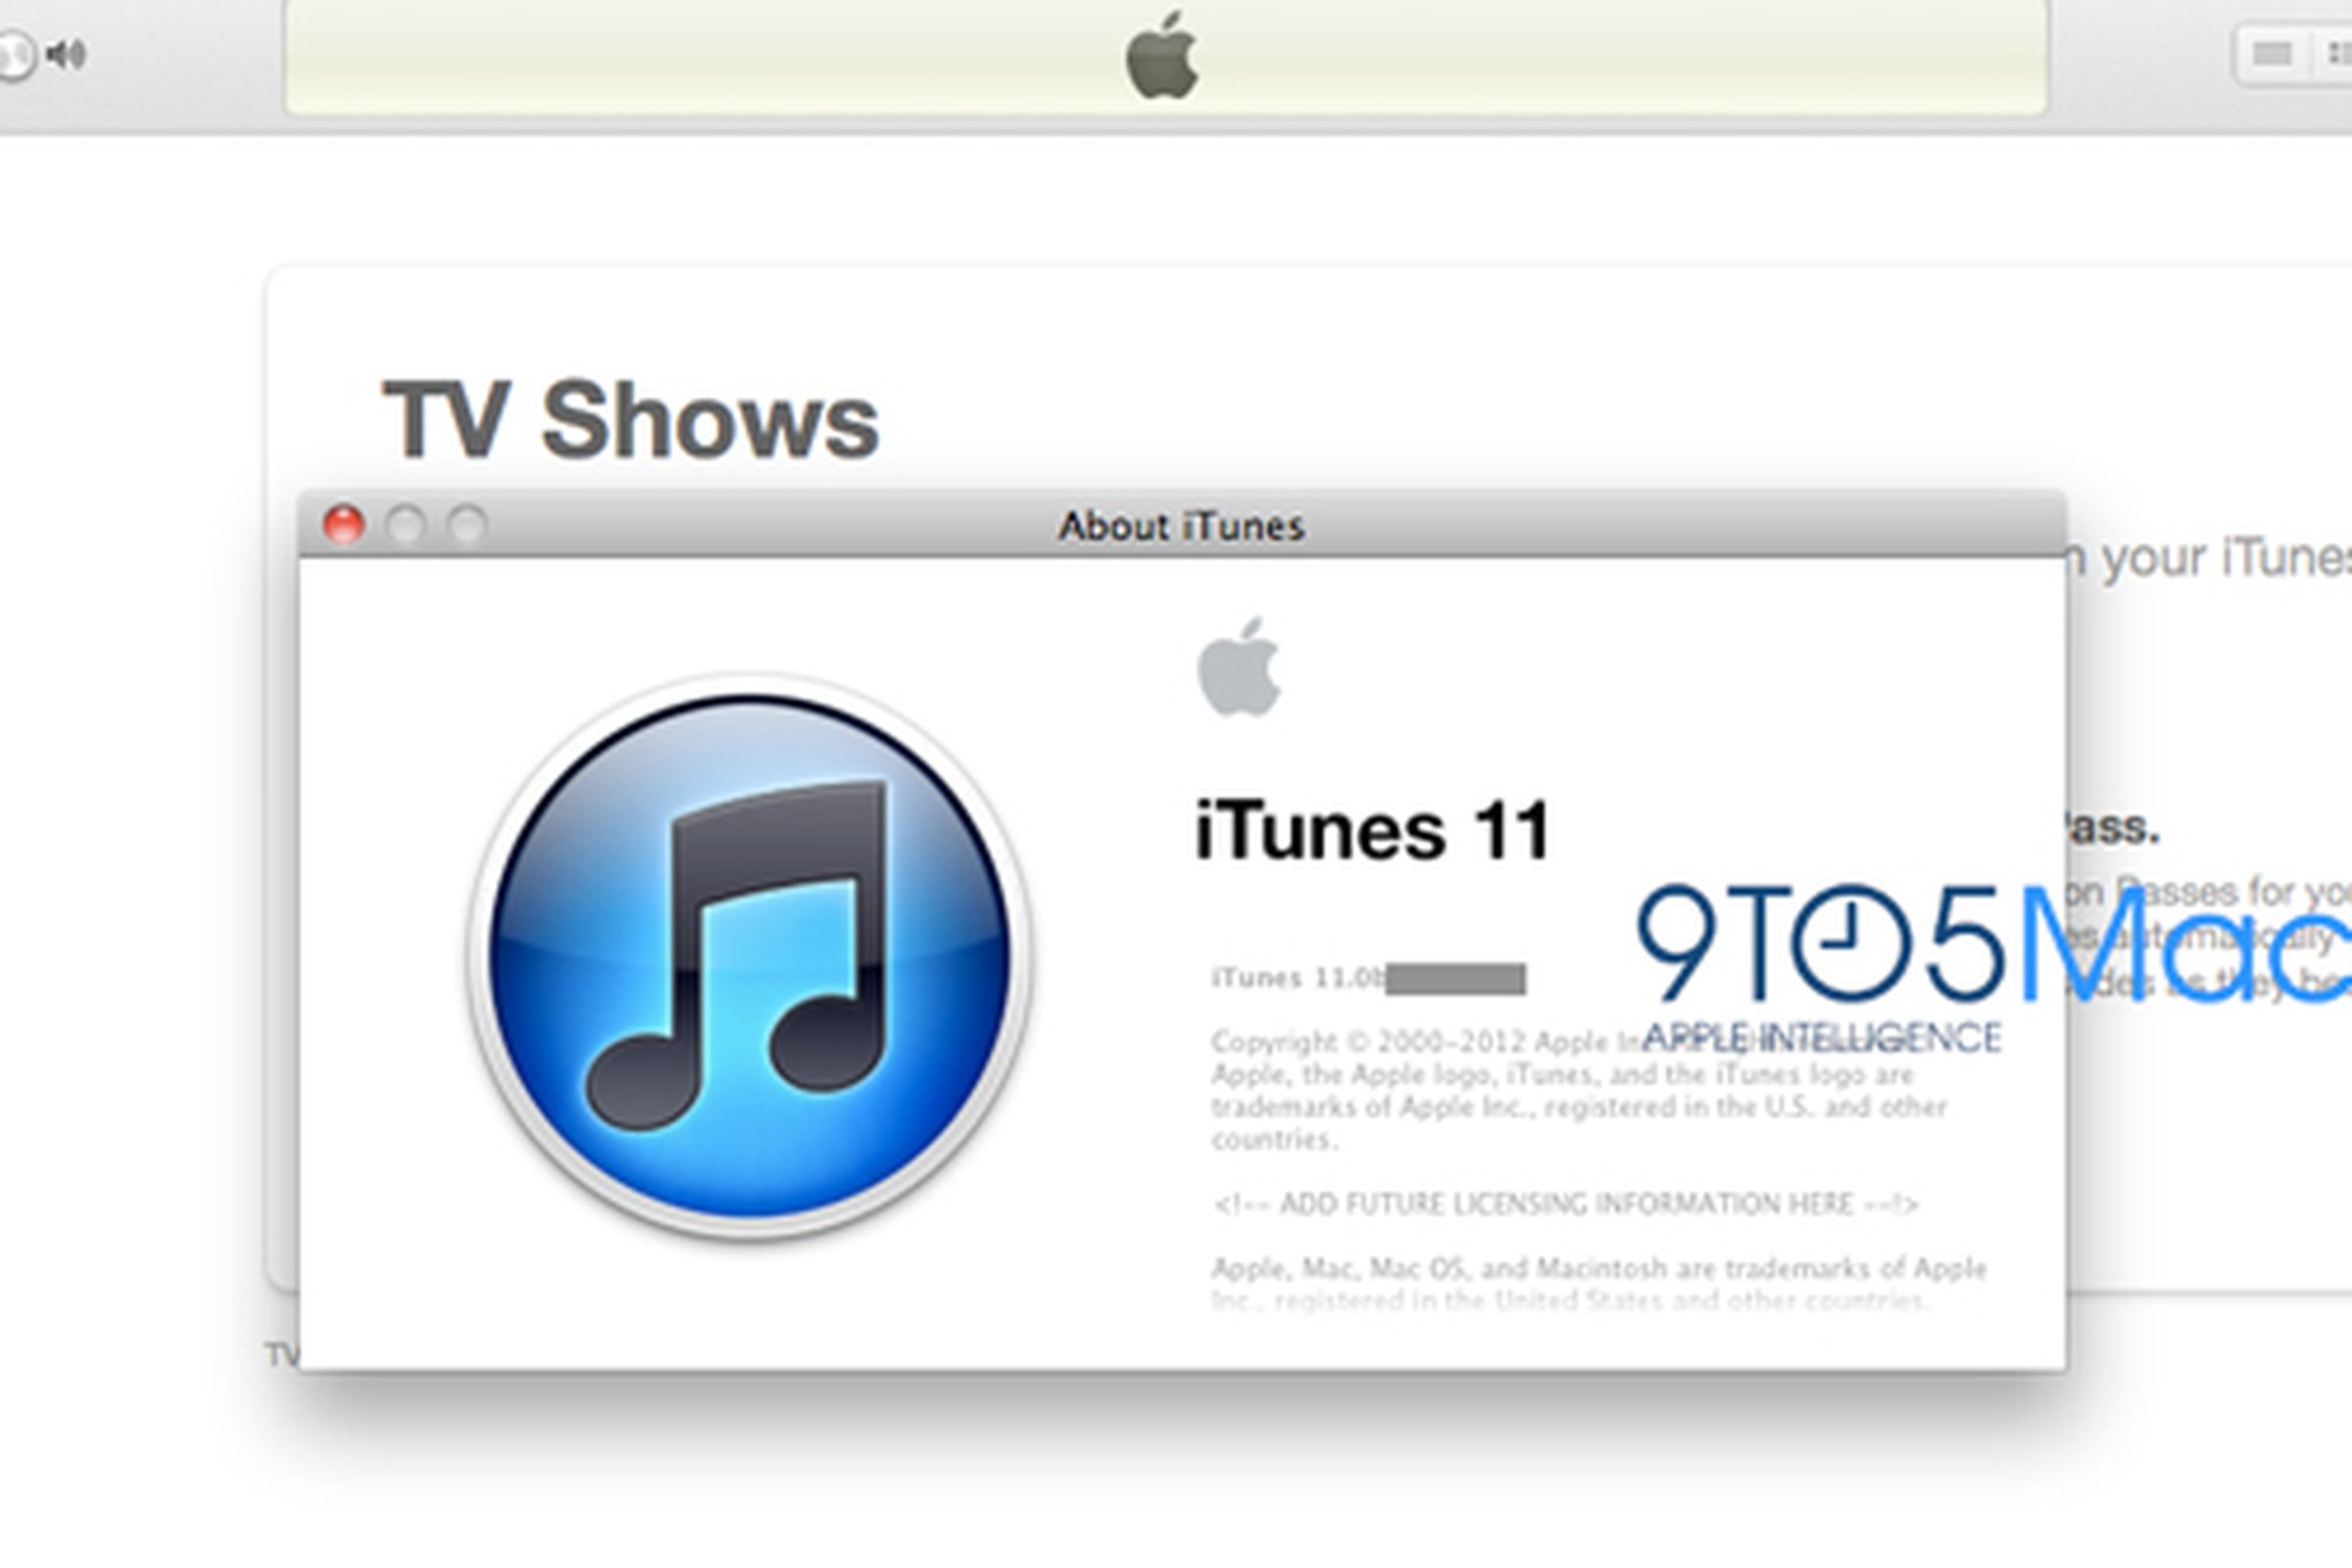 iTunes 11 screenshot 9to5mac